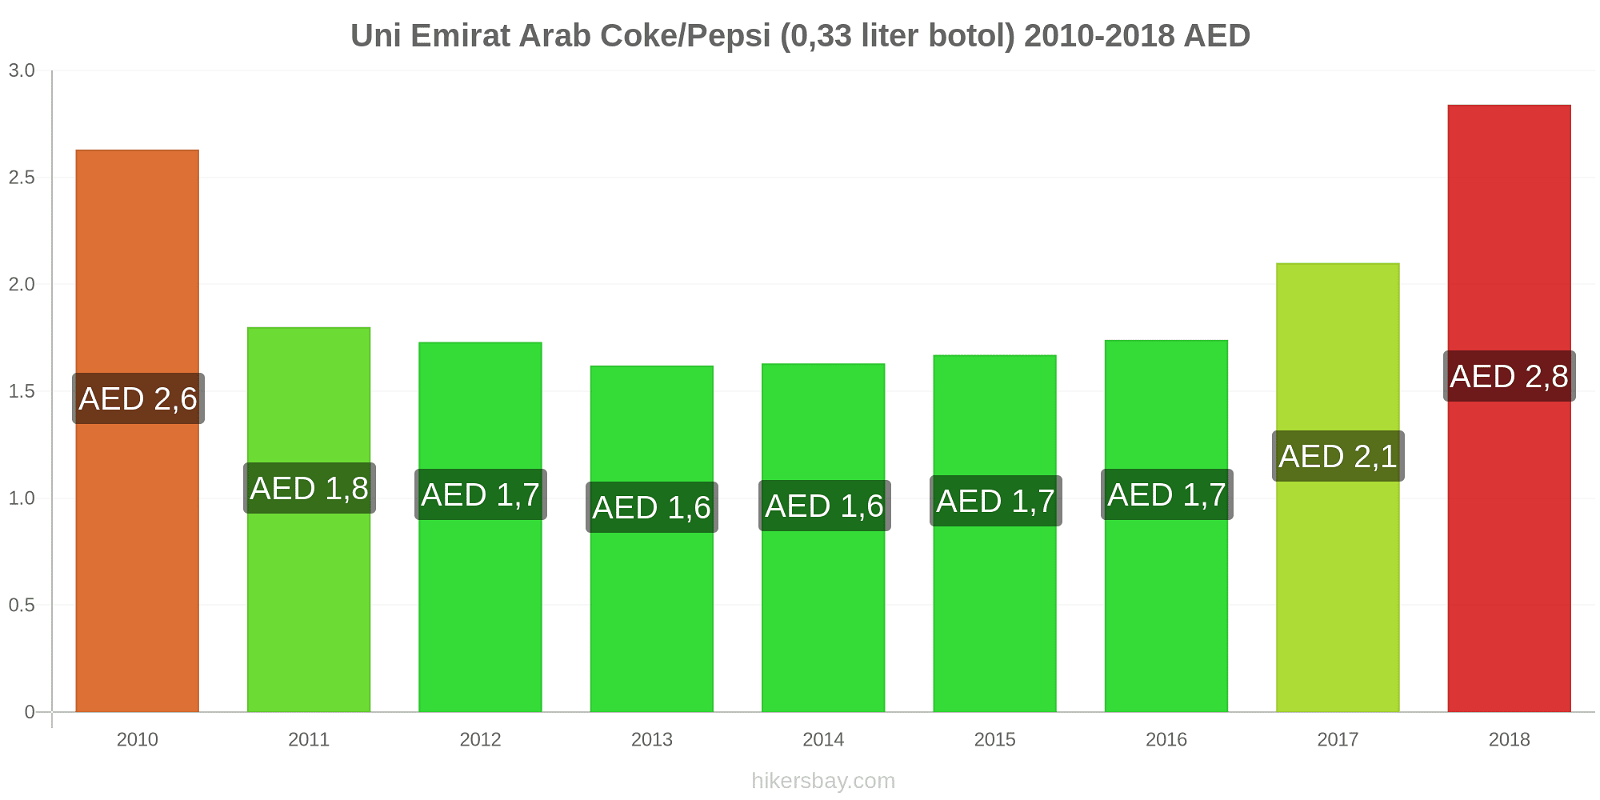 Uni Emirat Arab perubahan harga Coca-Cola/Pepsi (botol 0.33 liter) hikersbay.com